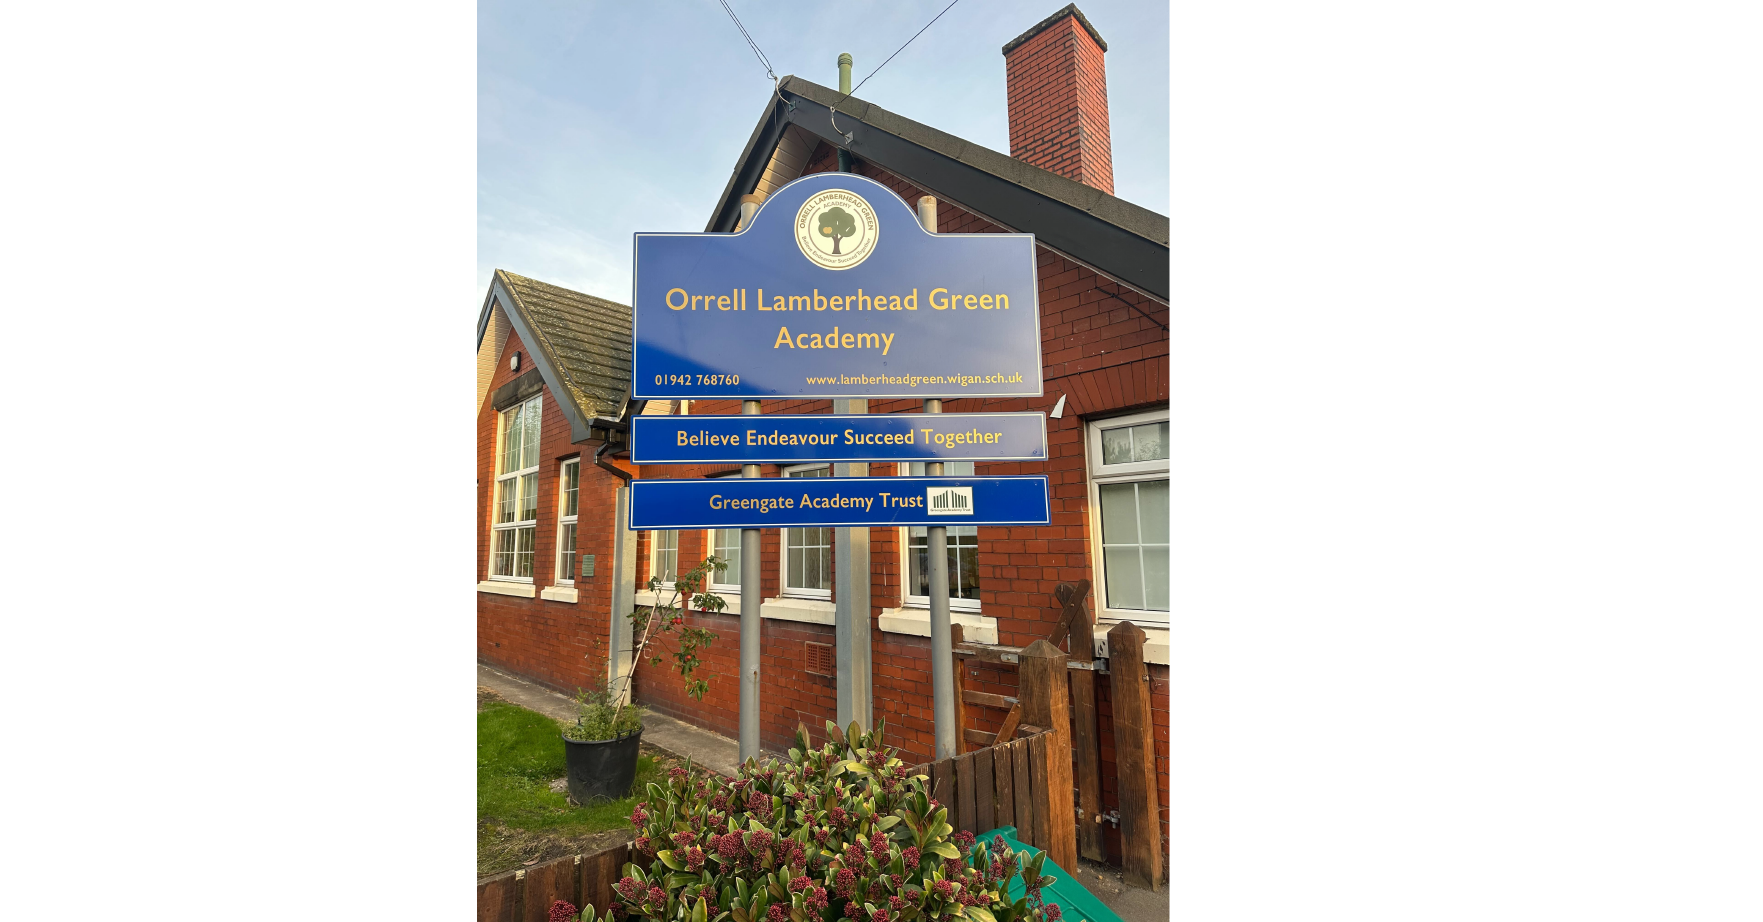 Orrell Lamberhead Green Academy 